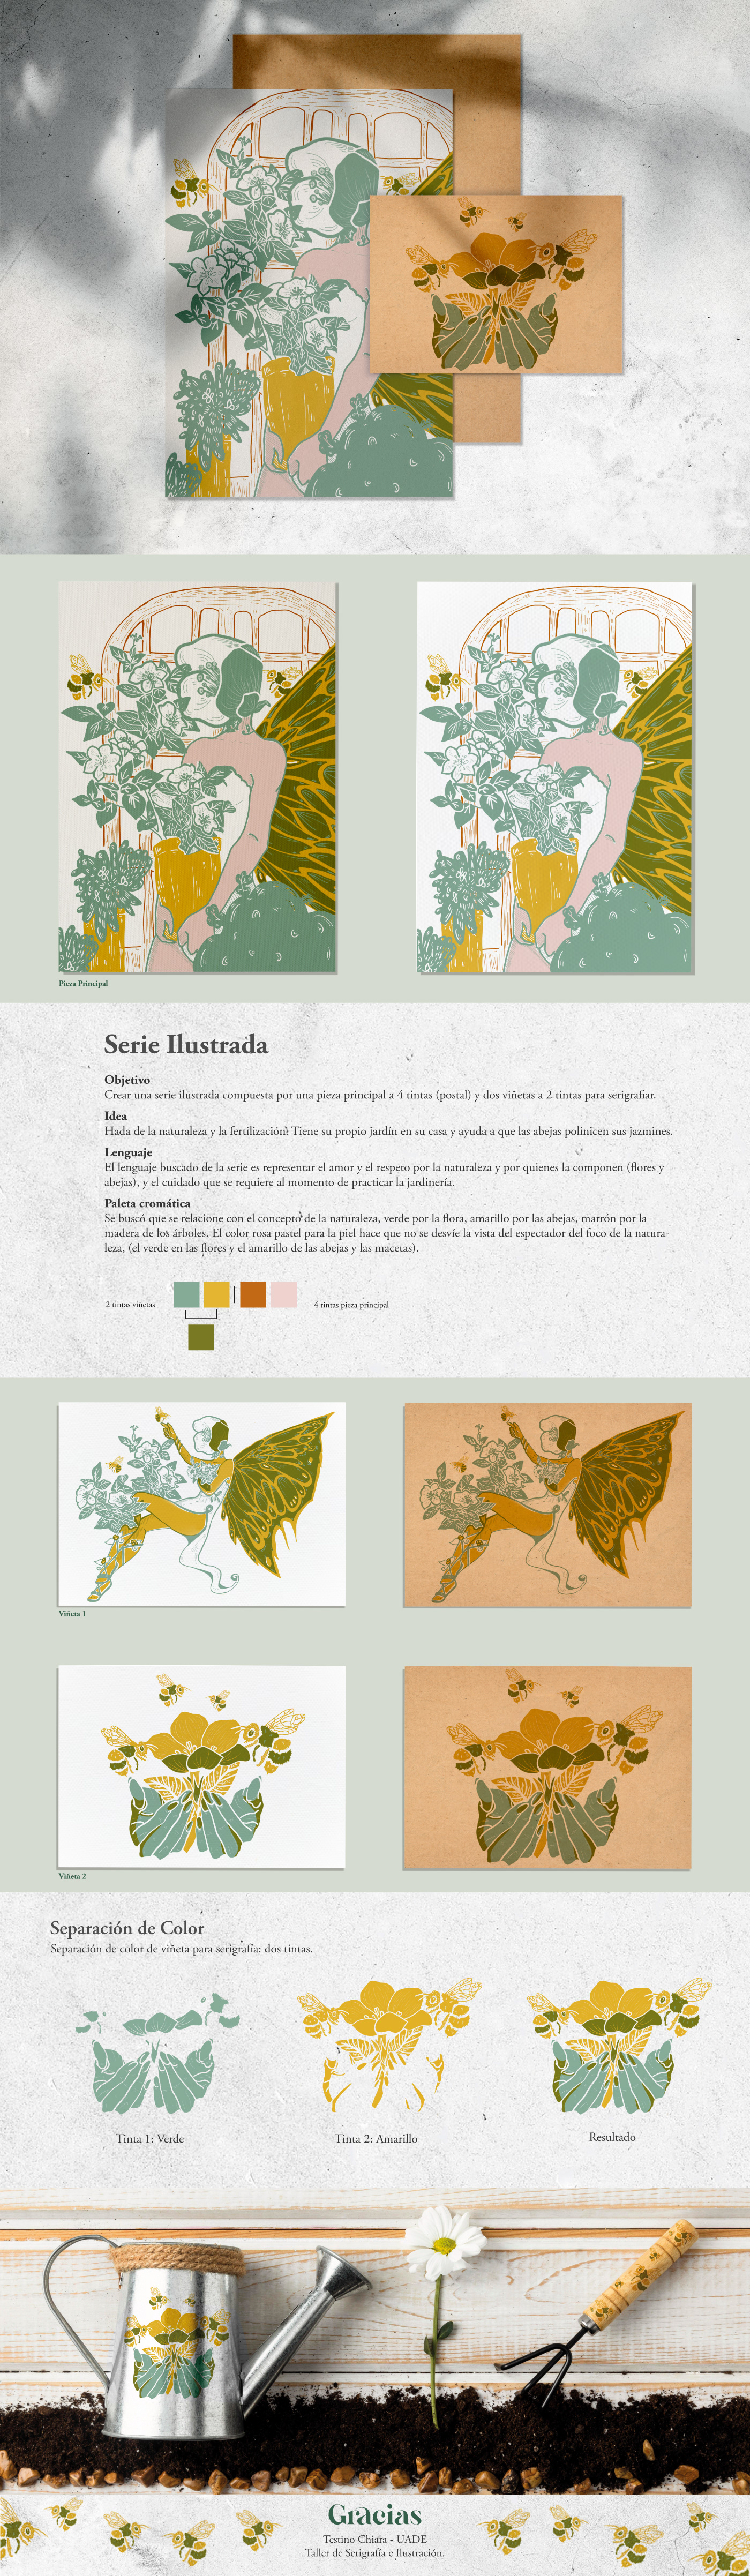 ilustracion serigrafia diseño gráfico uade diseño grafico jardineria